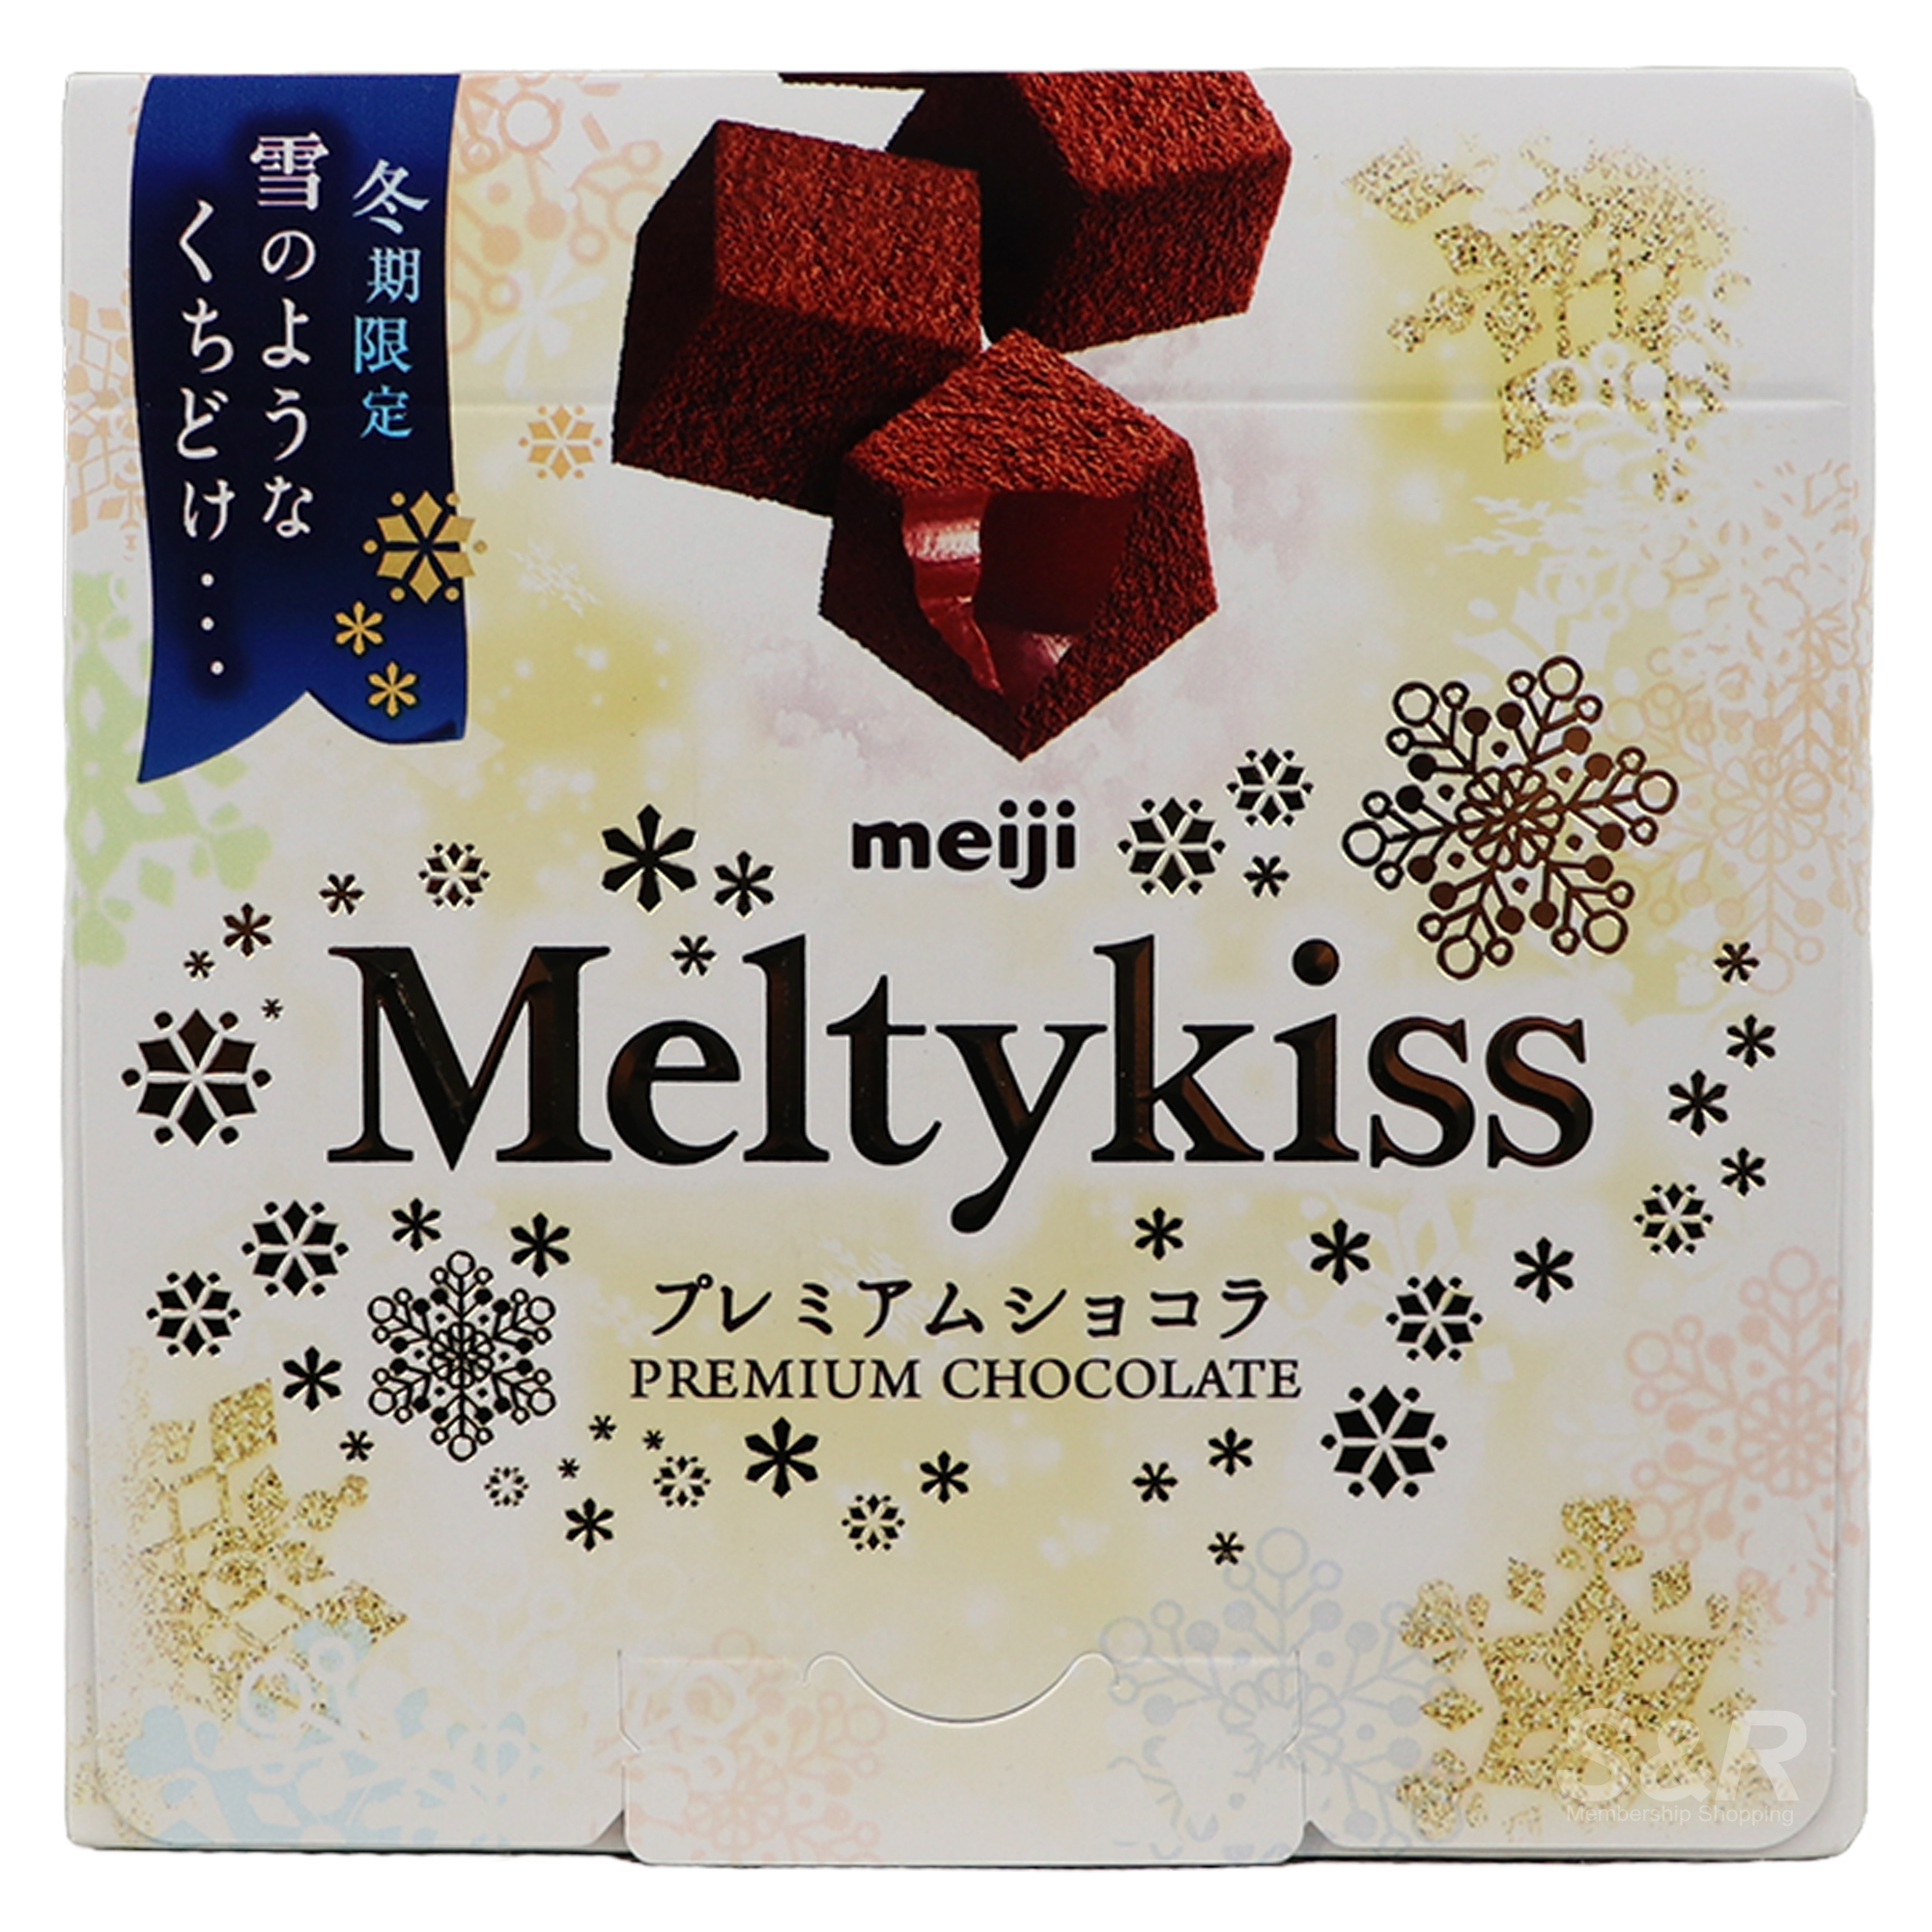 Meiji Melty Kiss Premium Chocolate 56g